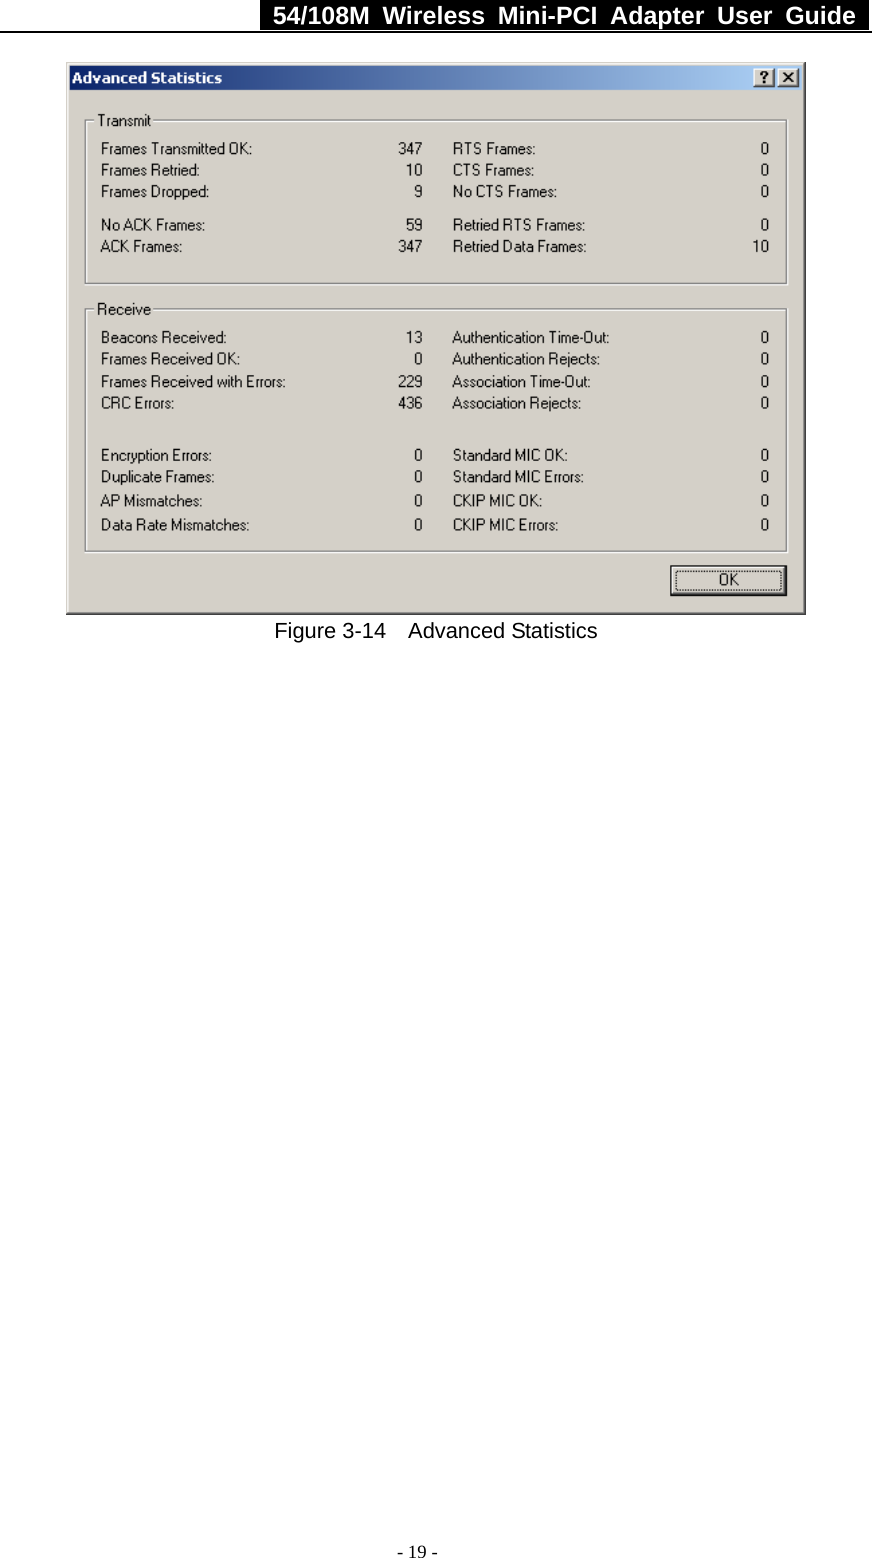   54/108M Wireless Mini-PCI Adapter User Guide  - 19 -  Figure 3-14  Advanced Statistics 